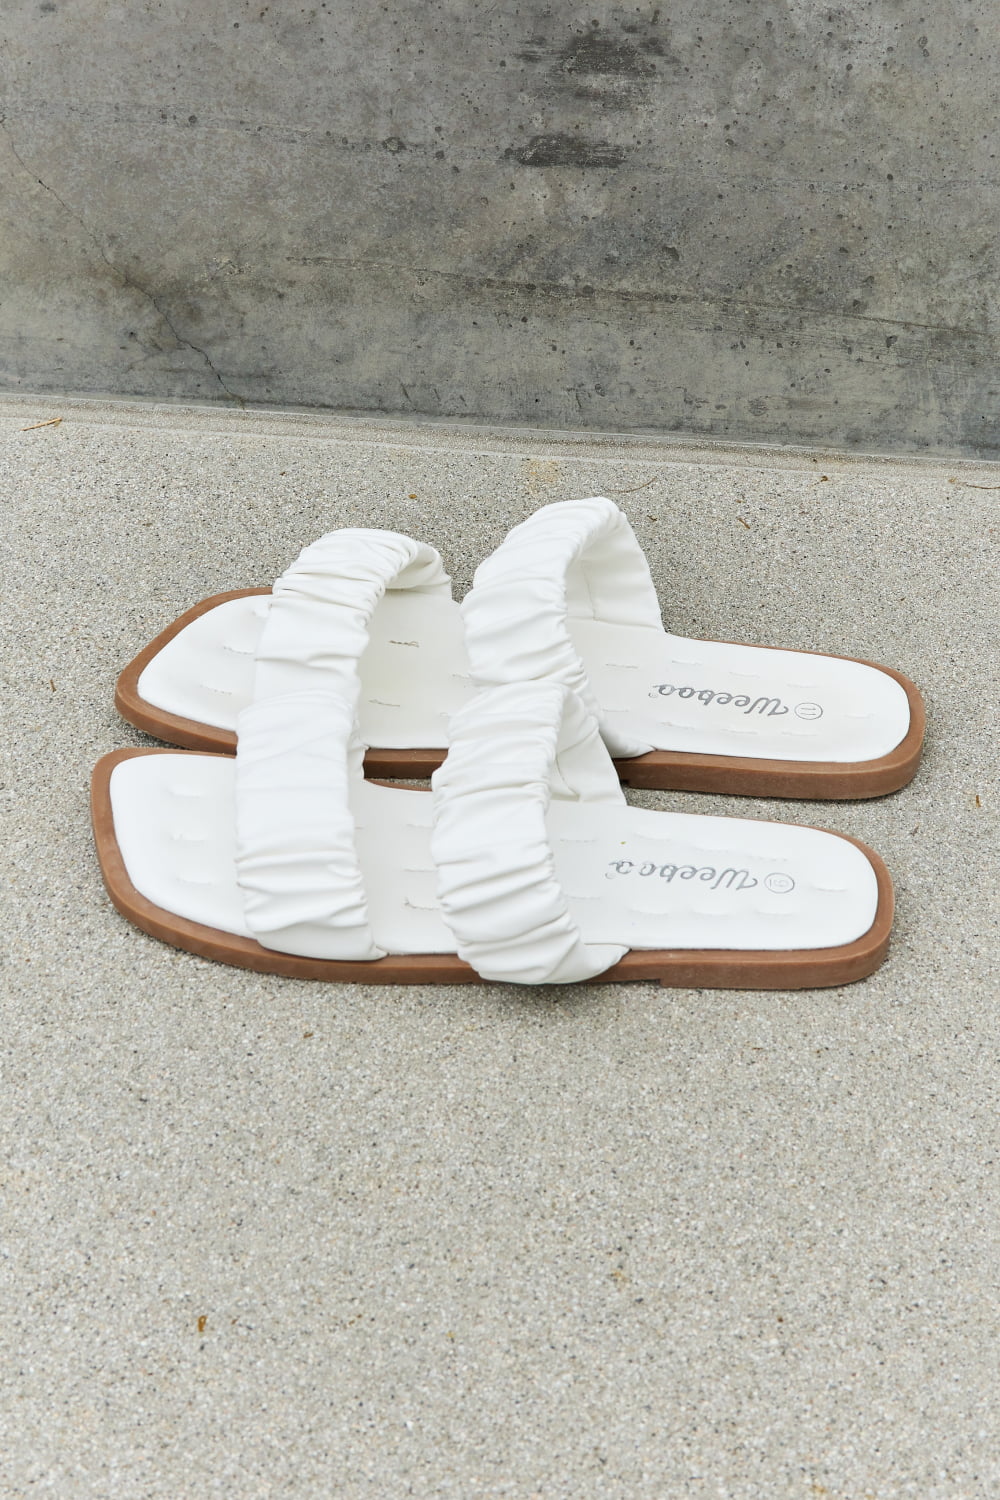 Double Strap Scrunch Sandal in White